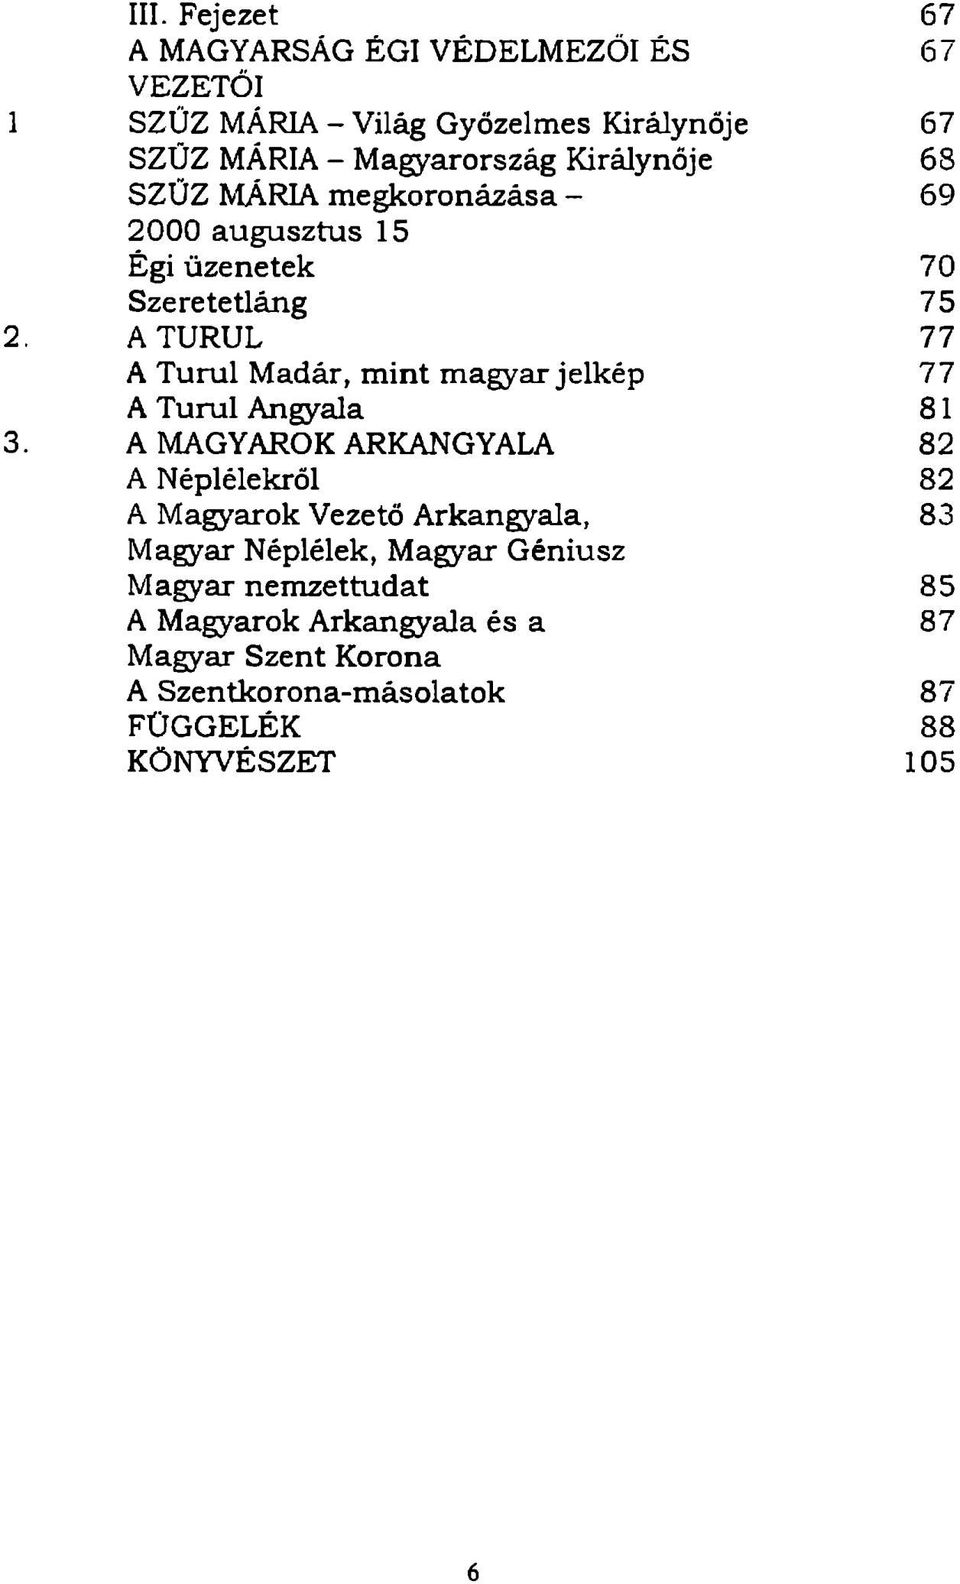 A TURUL 77 A Turul Madár, m int m agyar jelkép 77 A Turul Angyala 81 3.